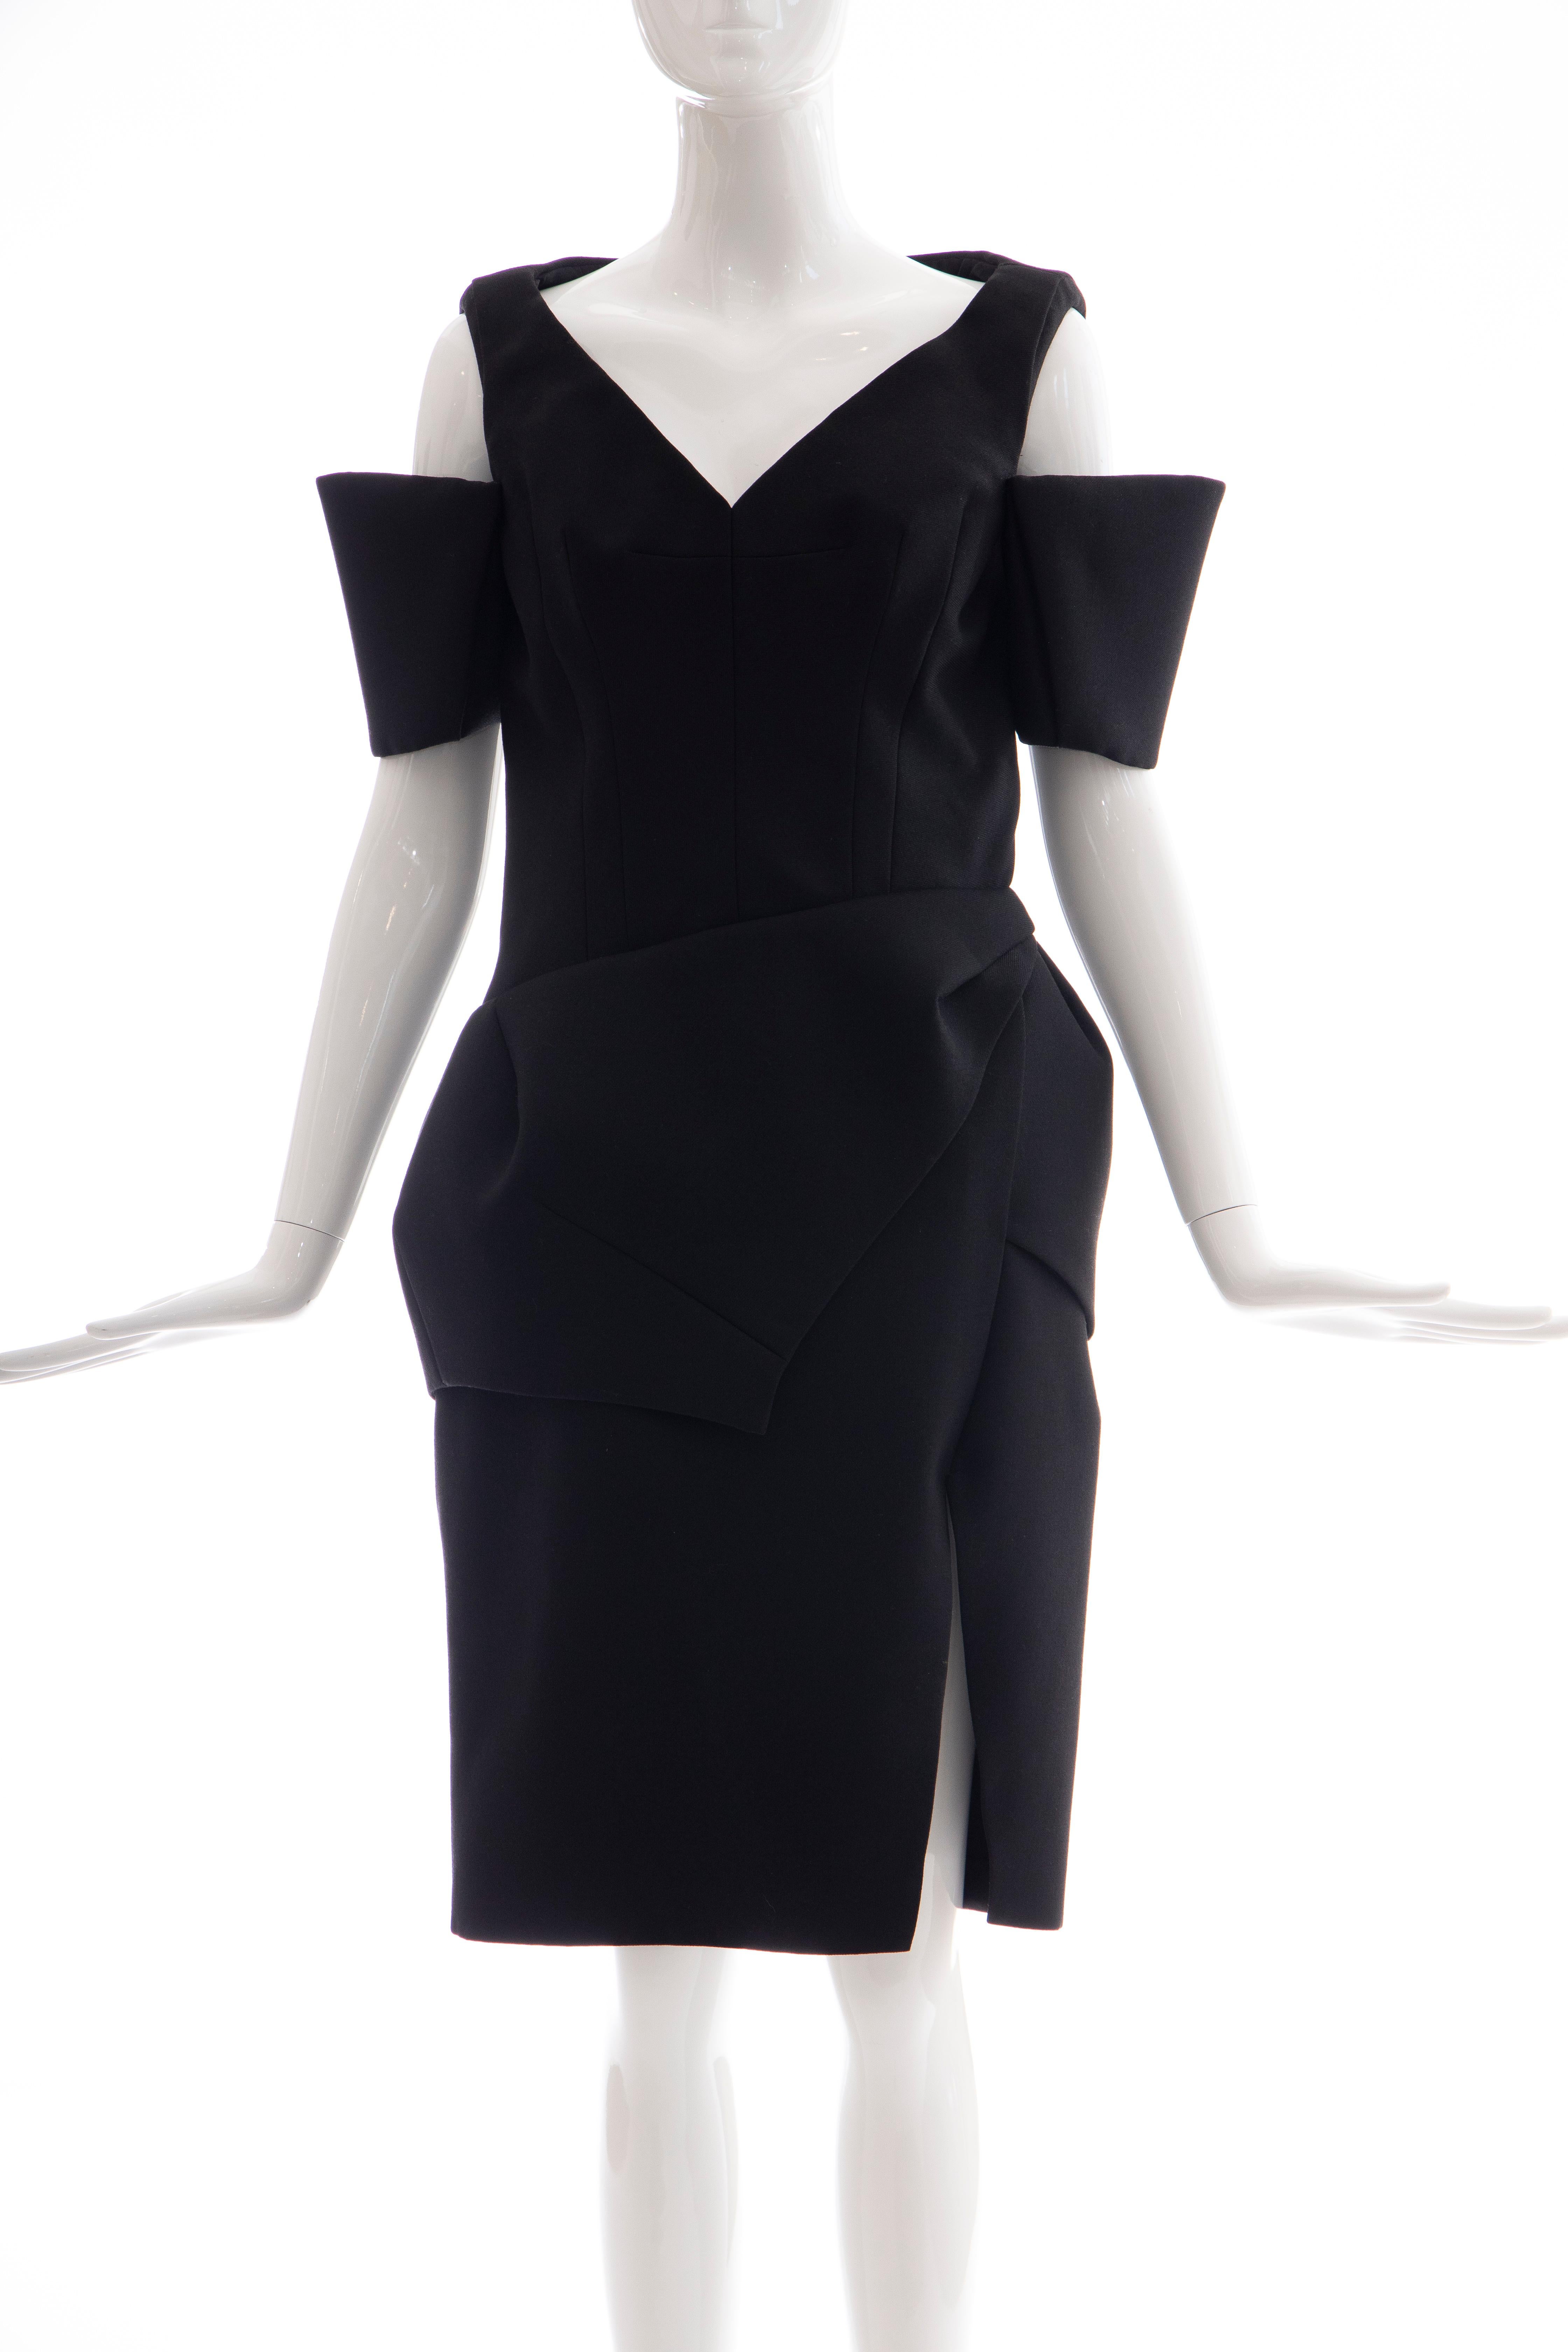 Nicolas Ghesquière for Balenciaga Runway Black Wool Structured Dress, Fall 2008 For Sale 6